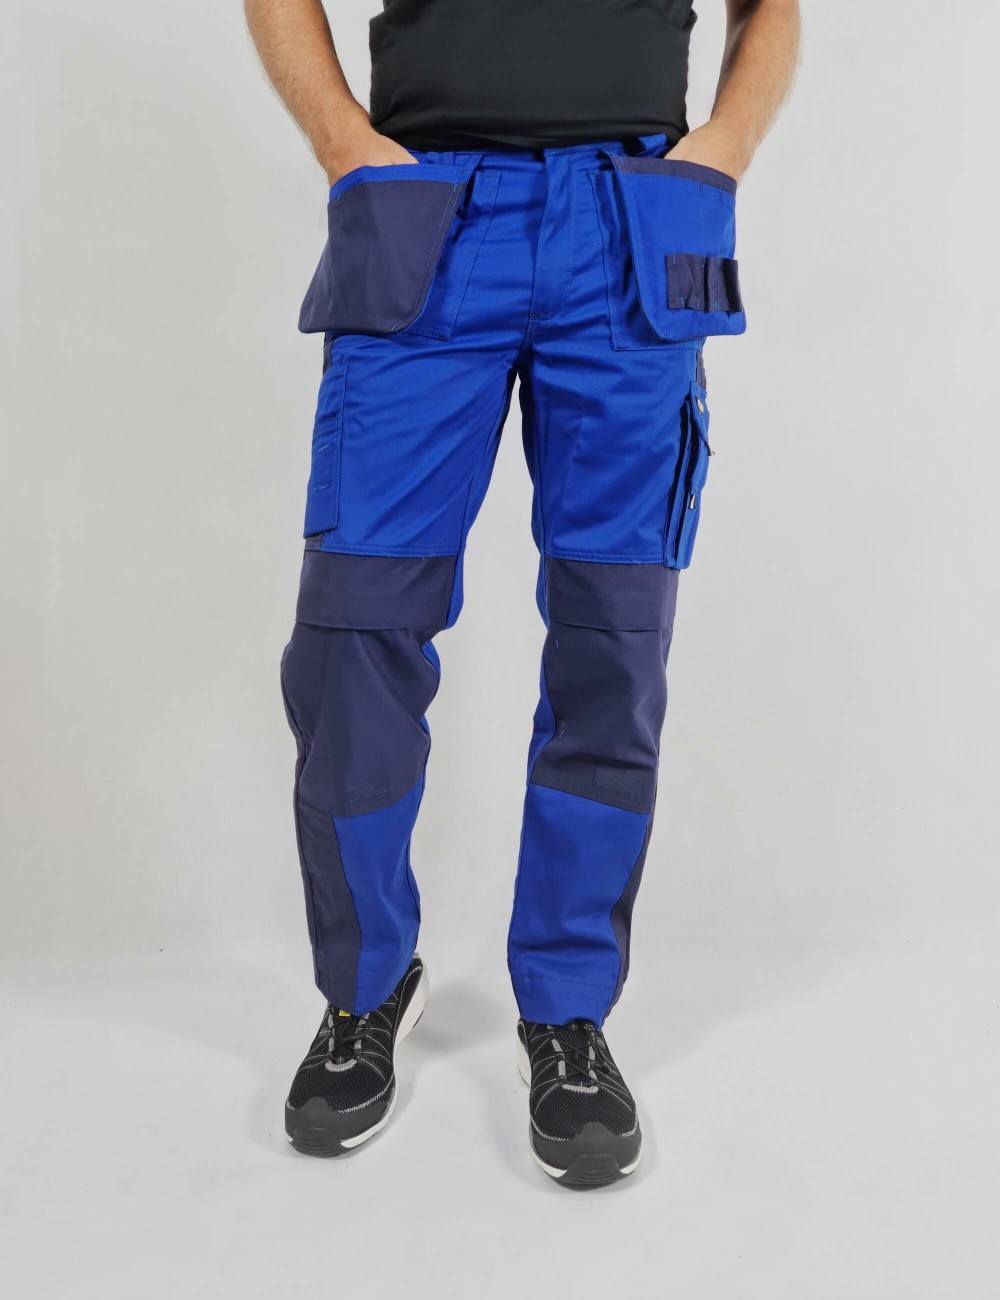 Men's Hi-Vis High Visibility Yellow Workwear Cargo Combat Trousers 30-48 |  eBay